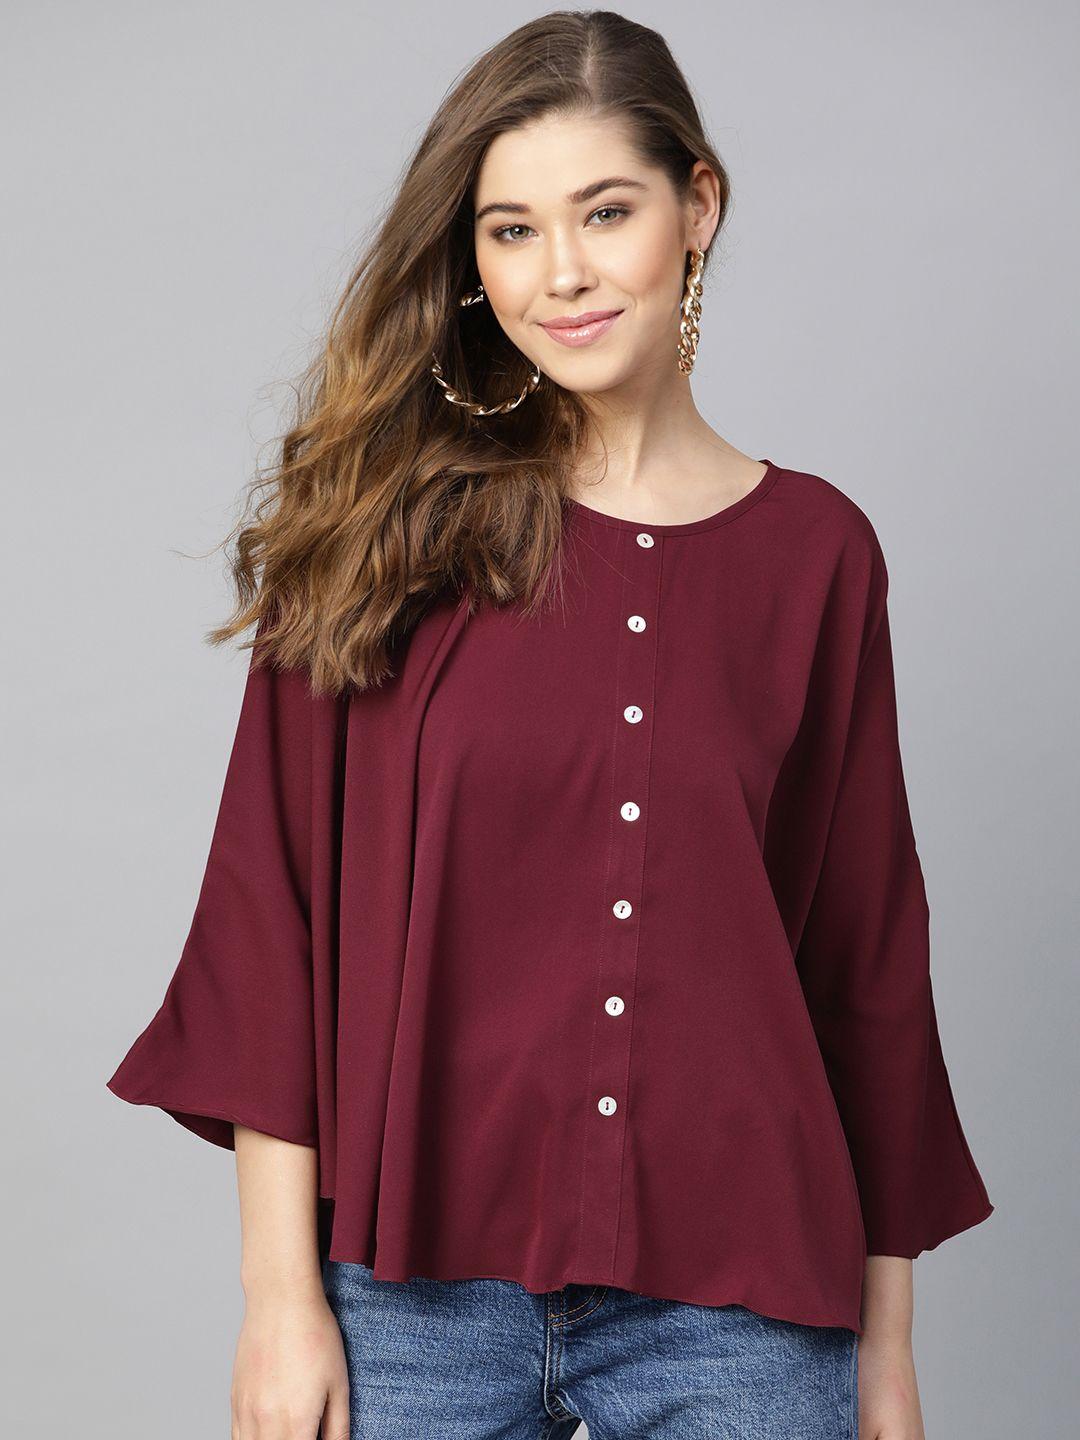 uptownie lite women burgundy solid cape top